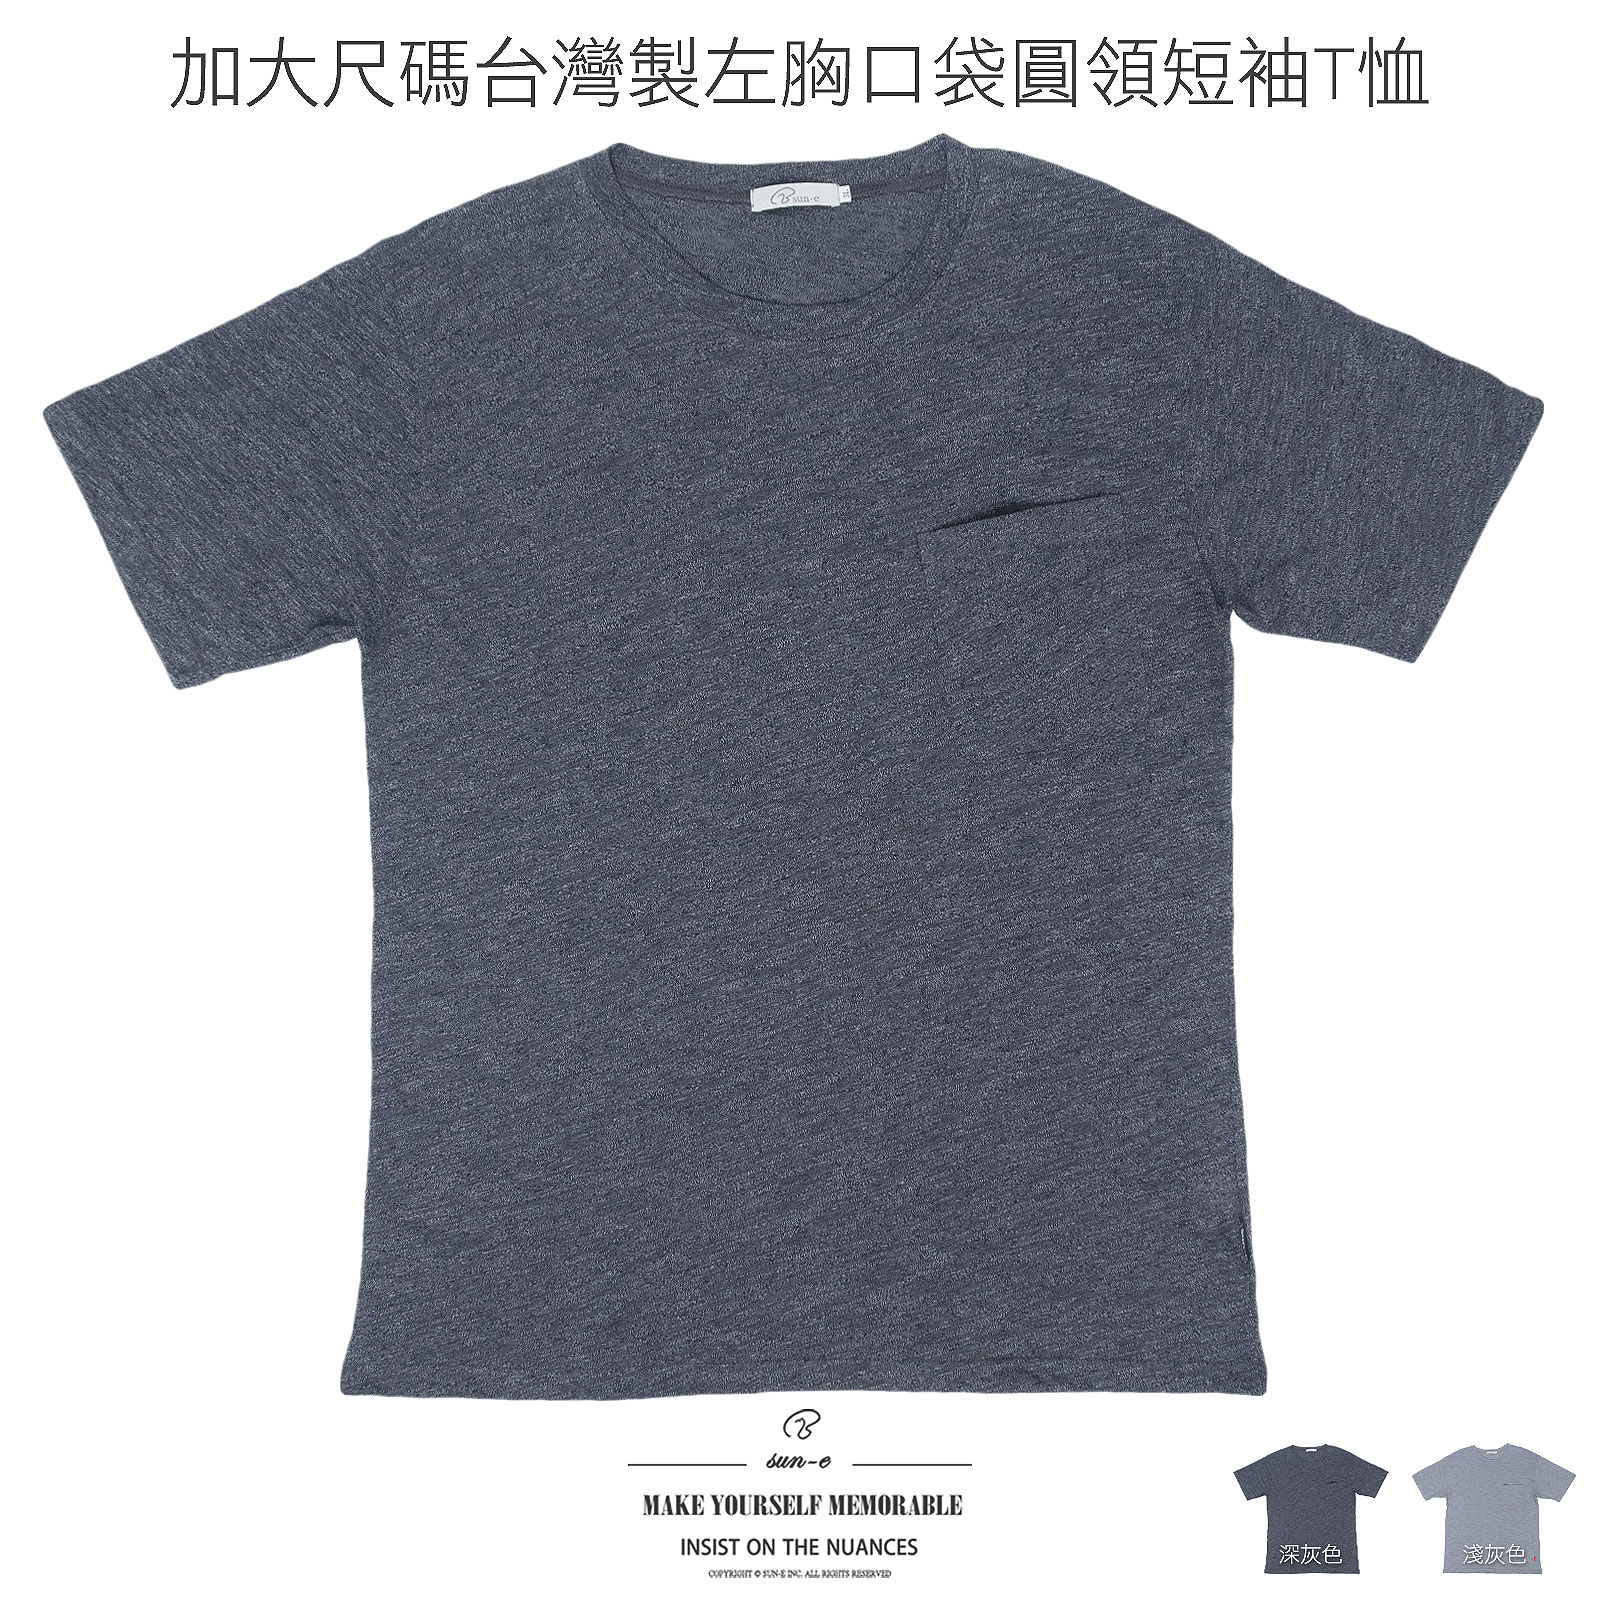 ［零碼促銷］加大尺碼T恤 台灣製T恤 短袖T恤 左胸口袋T恤 百搭素面短Tee 圓領T恤 大尺碼男裝 短袖上衣 Big And Tall T-shirt Made In Taiwan T-shirts Pocket T-shirt Crewneck Short Sleeve T-shirt (310-2210-22)淺灰色、(310-2210-89)深灰色 3L 5L (胸圍:50~55英吋/127~140公分) 男 [實體店面保障] sun-e